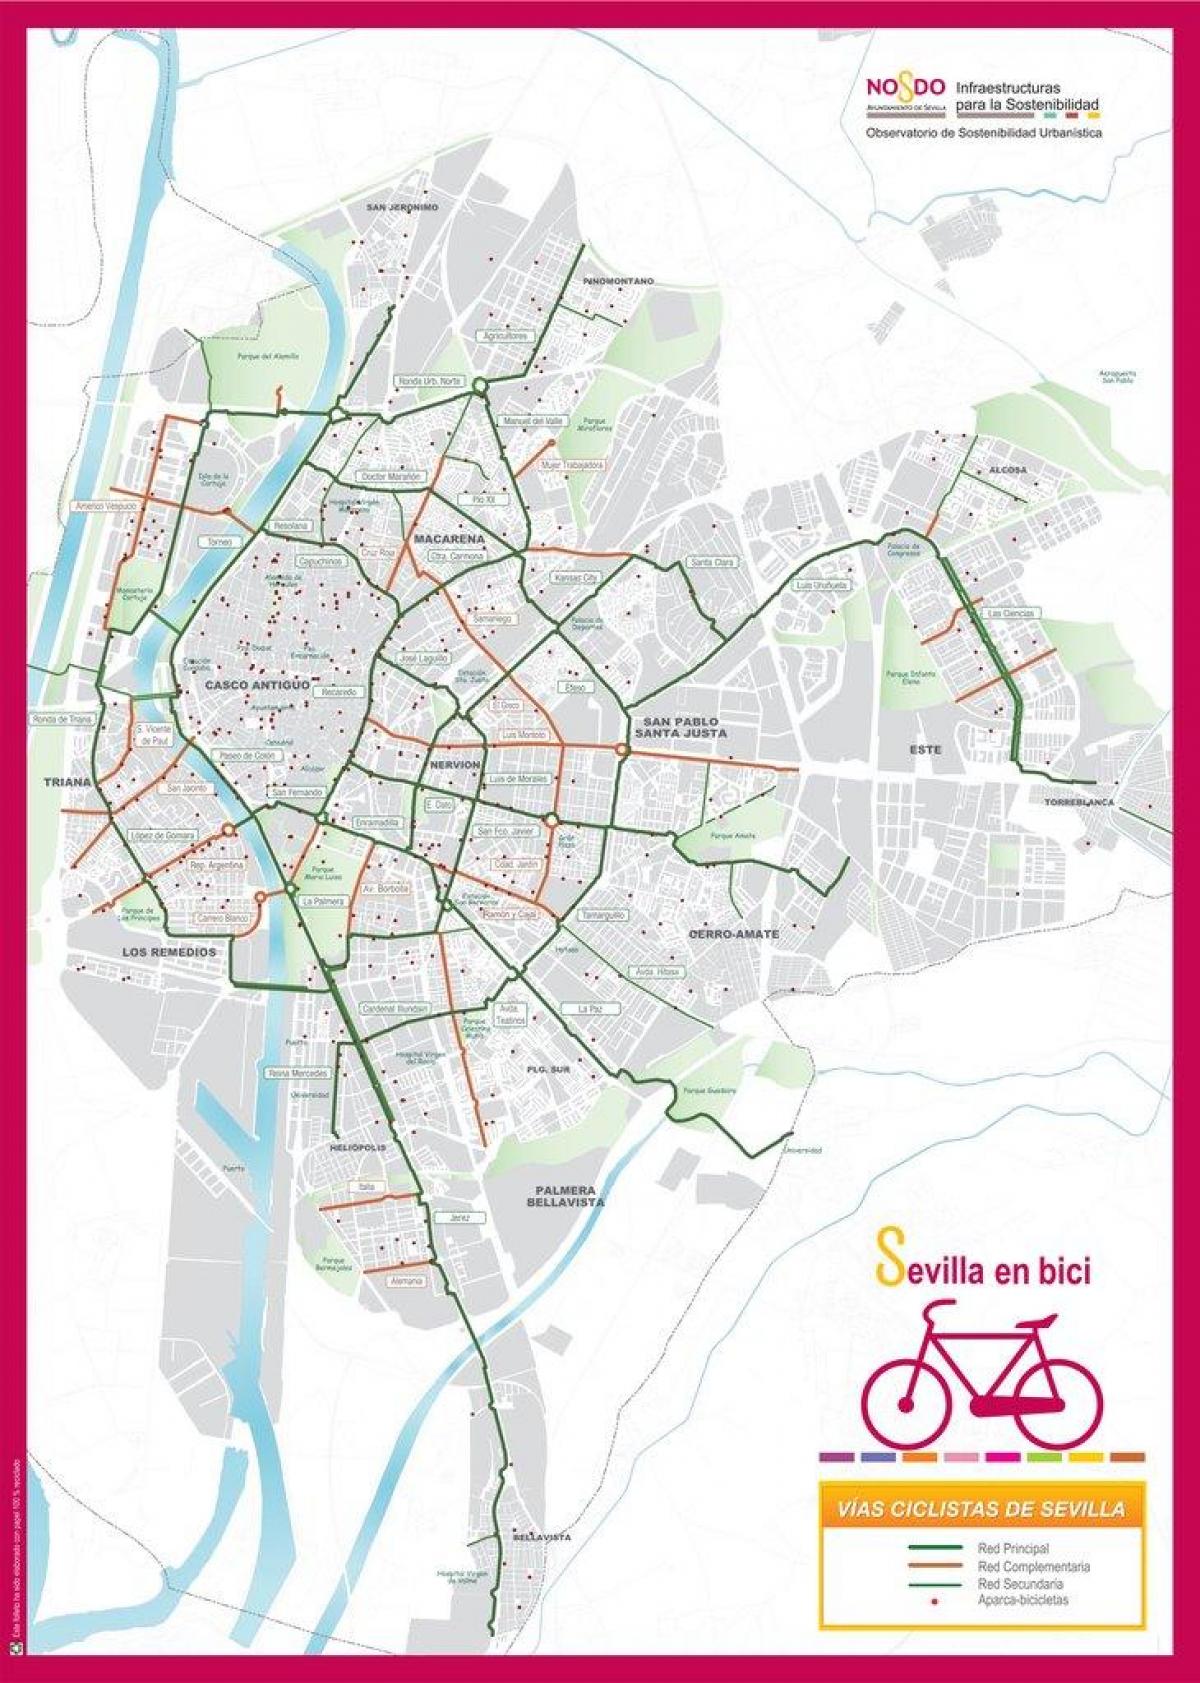 Seville bike lane map